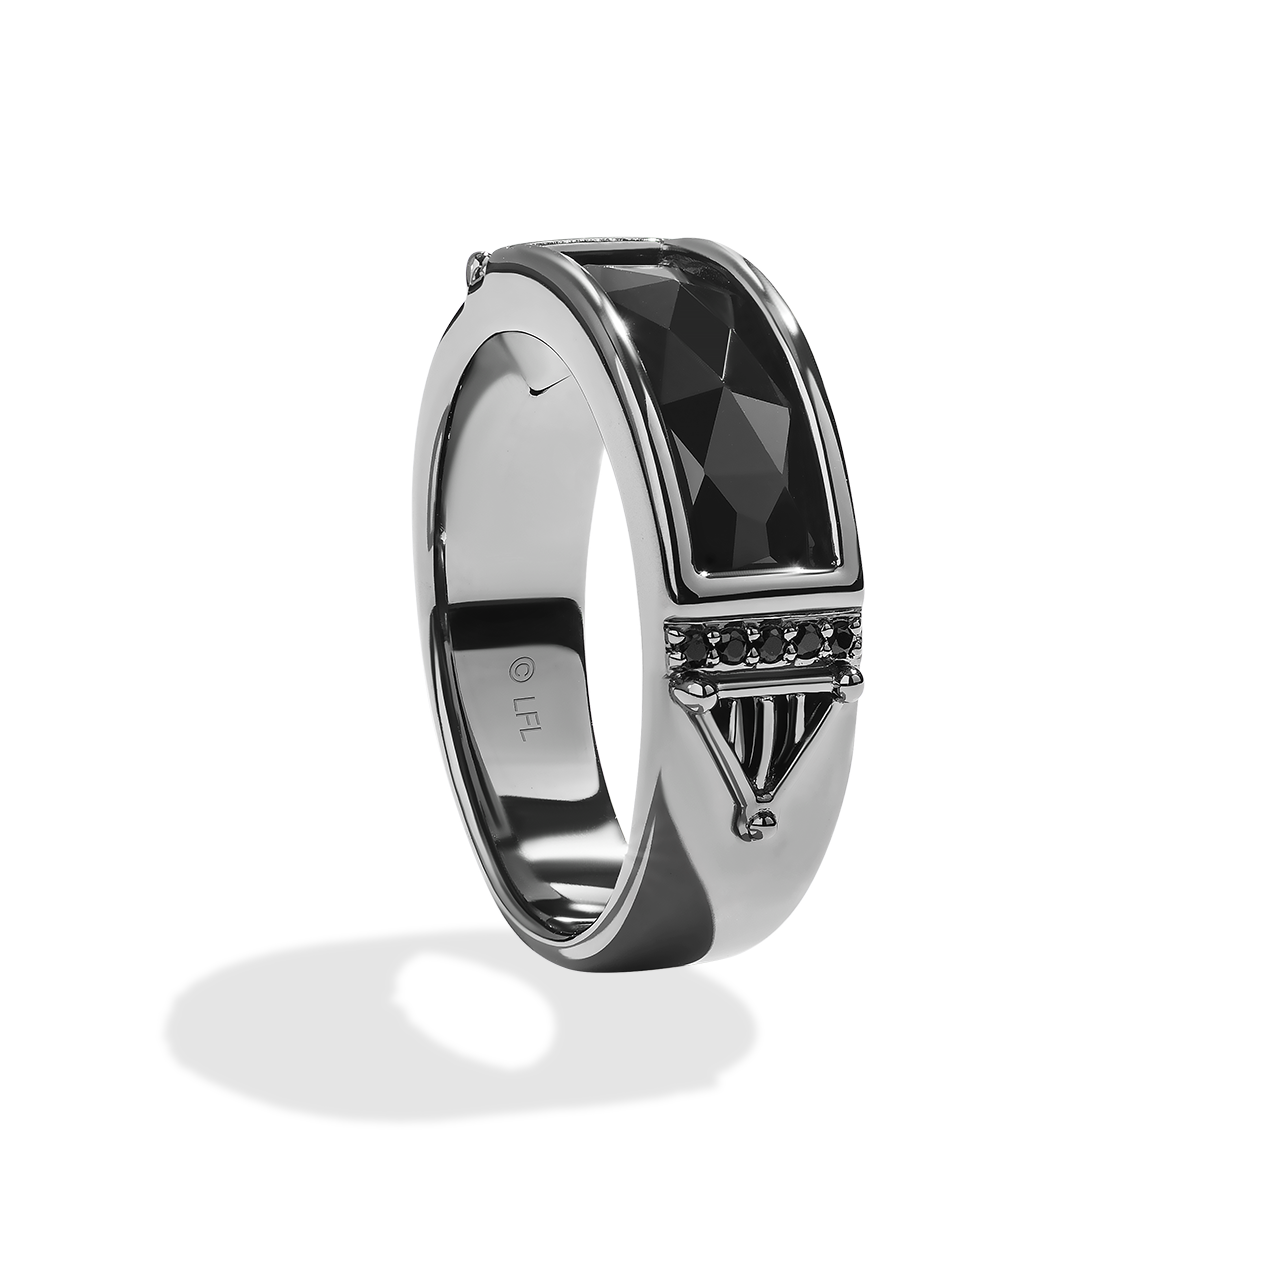 Star Wars™ Darth Maul Black Diamonds Men's Ring in Black Rhodium